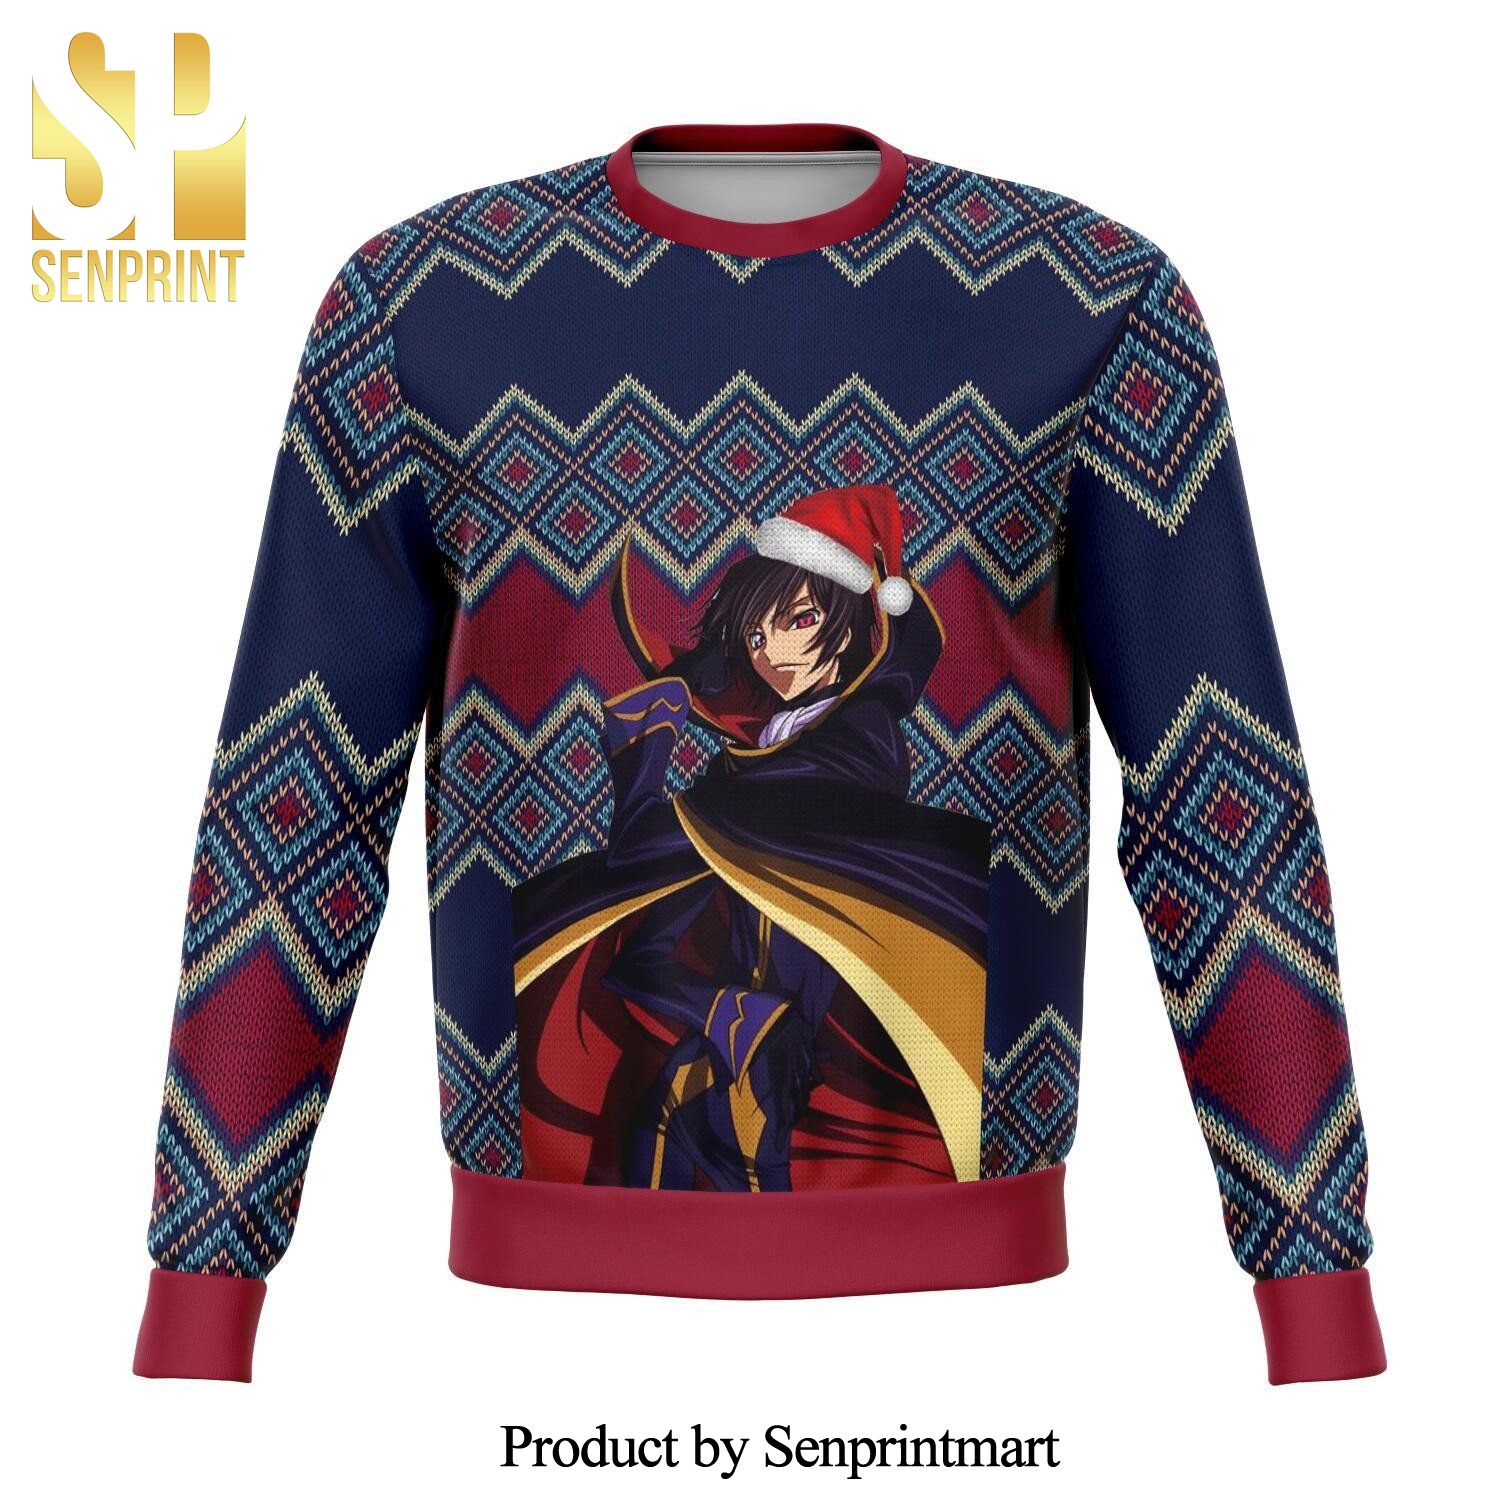 Code Geass Premium Manga Anime Knitted Ugly Christmas Sweater